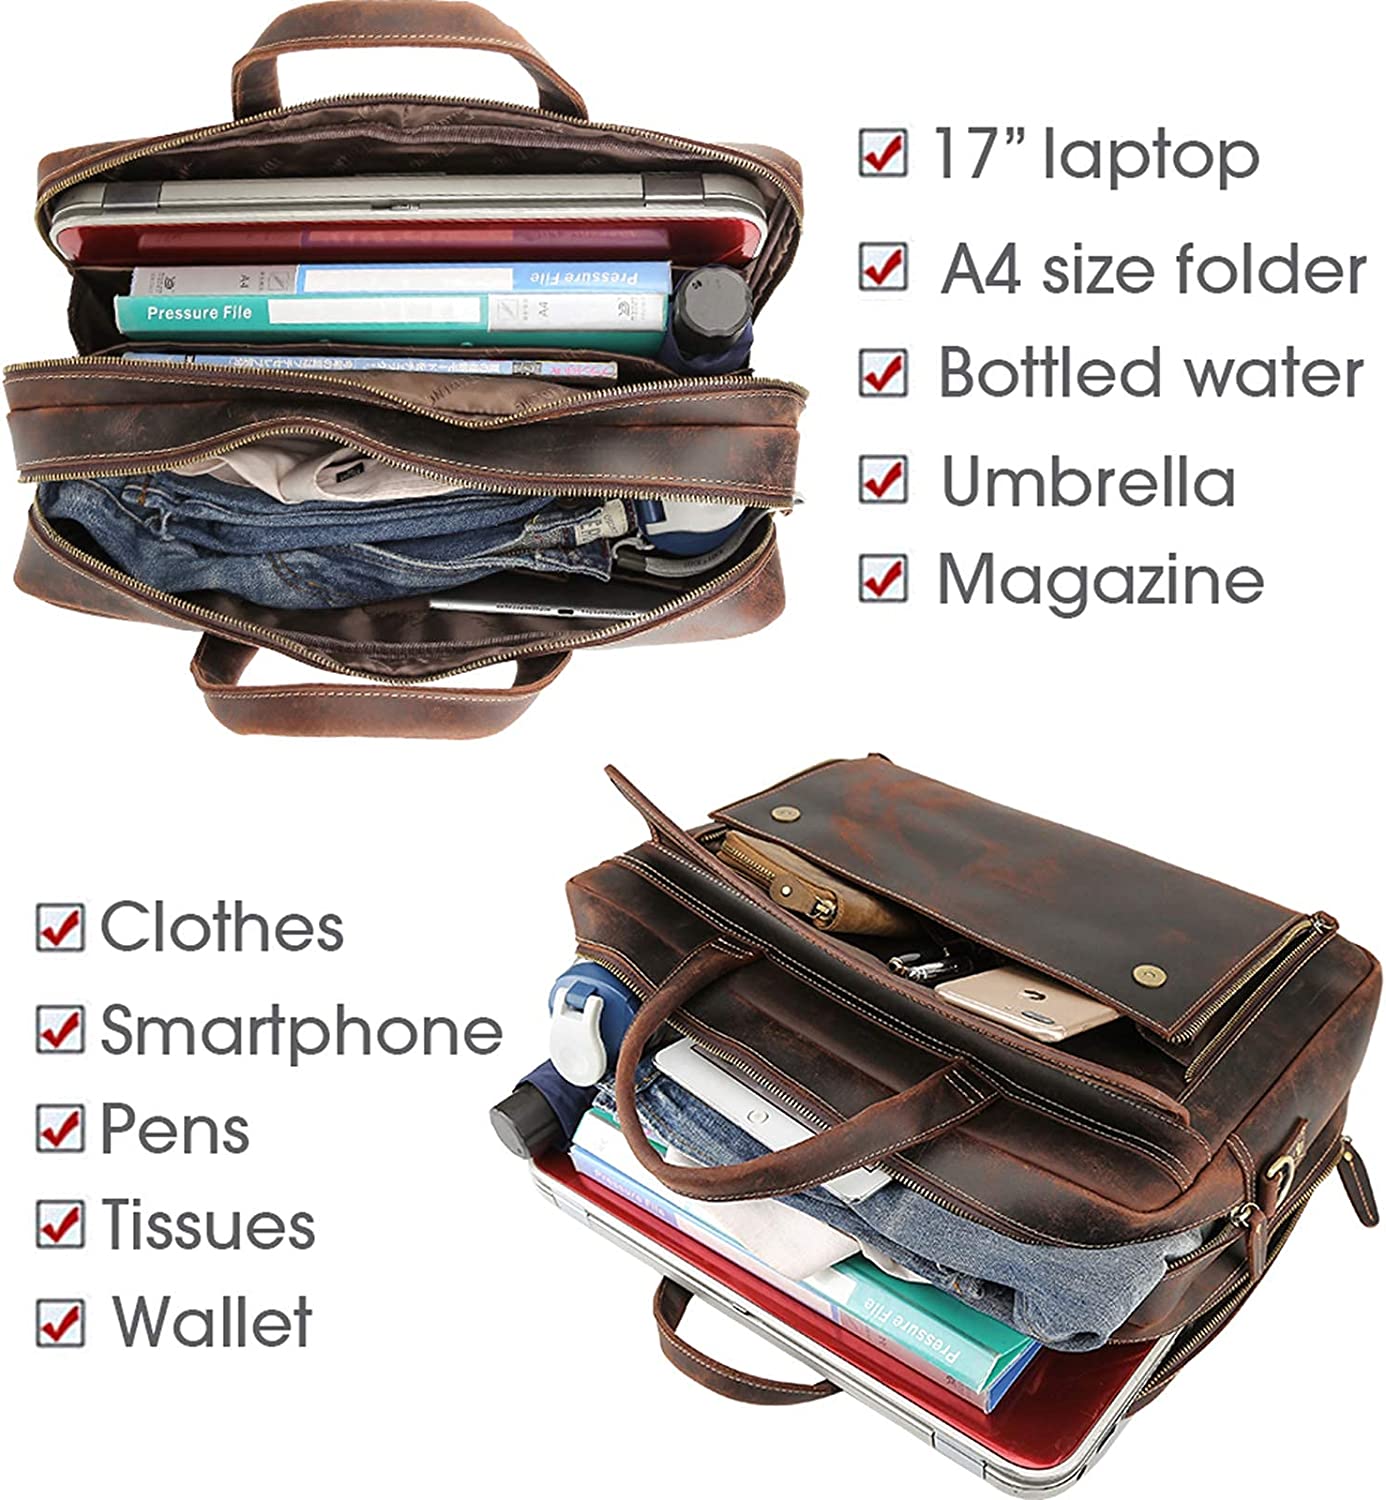 Leather Briefcase for Men 17 Inch Laptop Computer Case Business Travel Work Messenger Cross Body Shoulder Bag